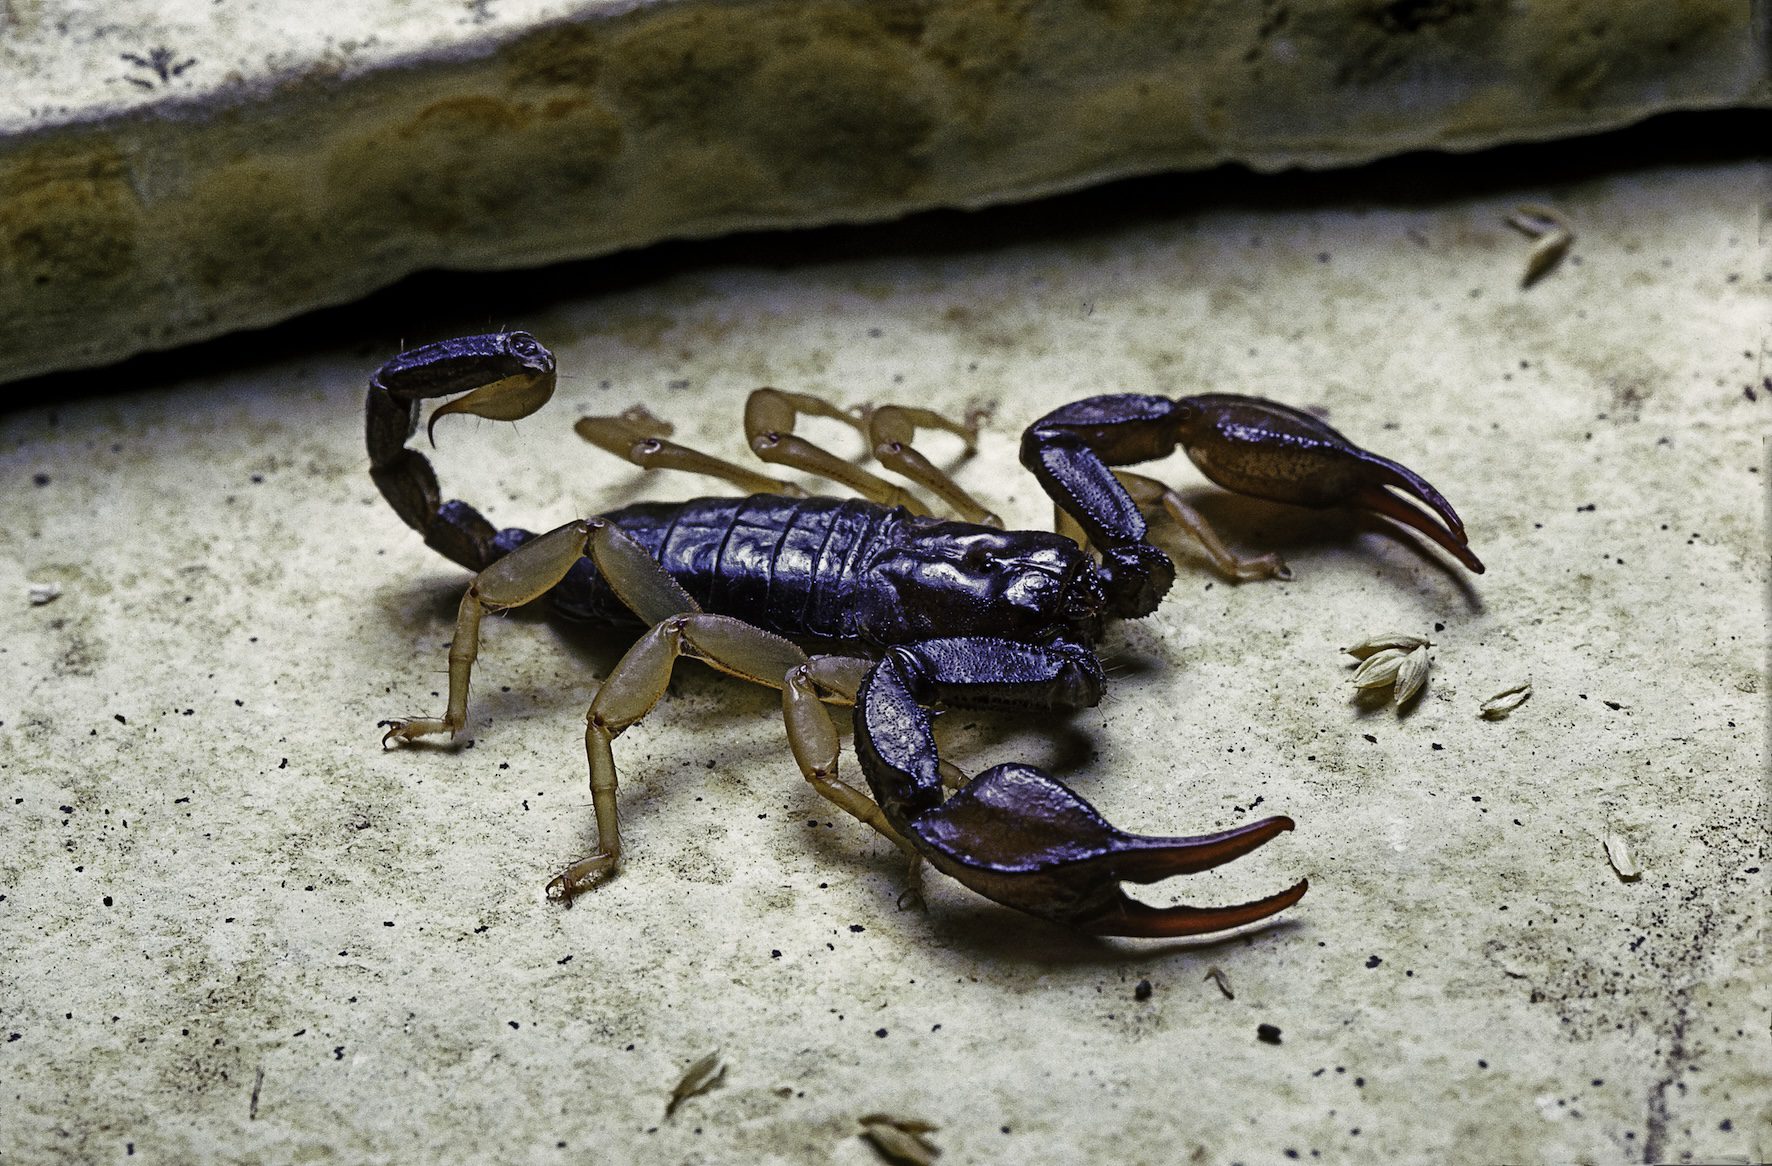 A European yellow-tailed scorpion